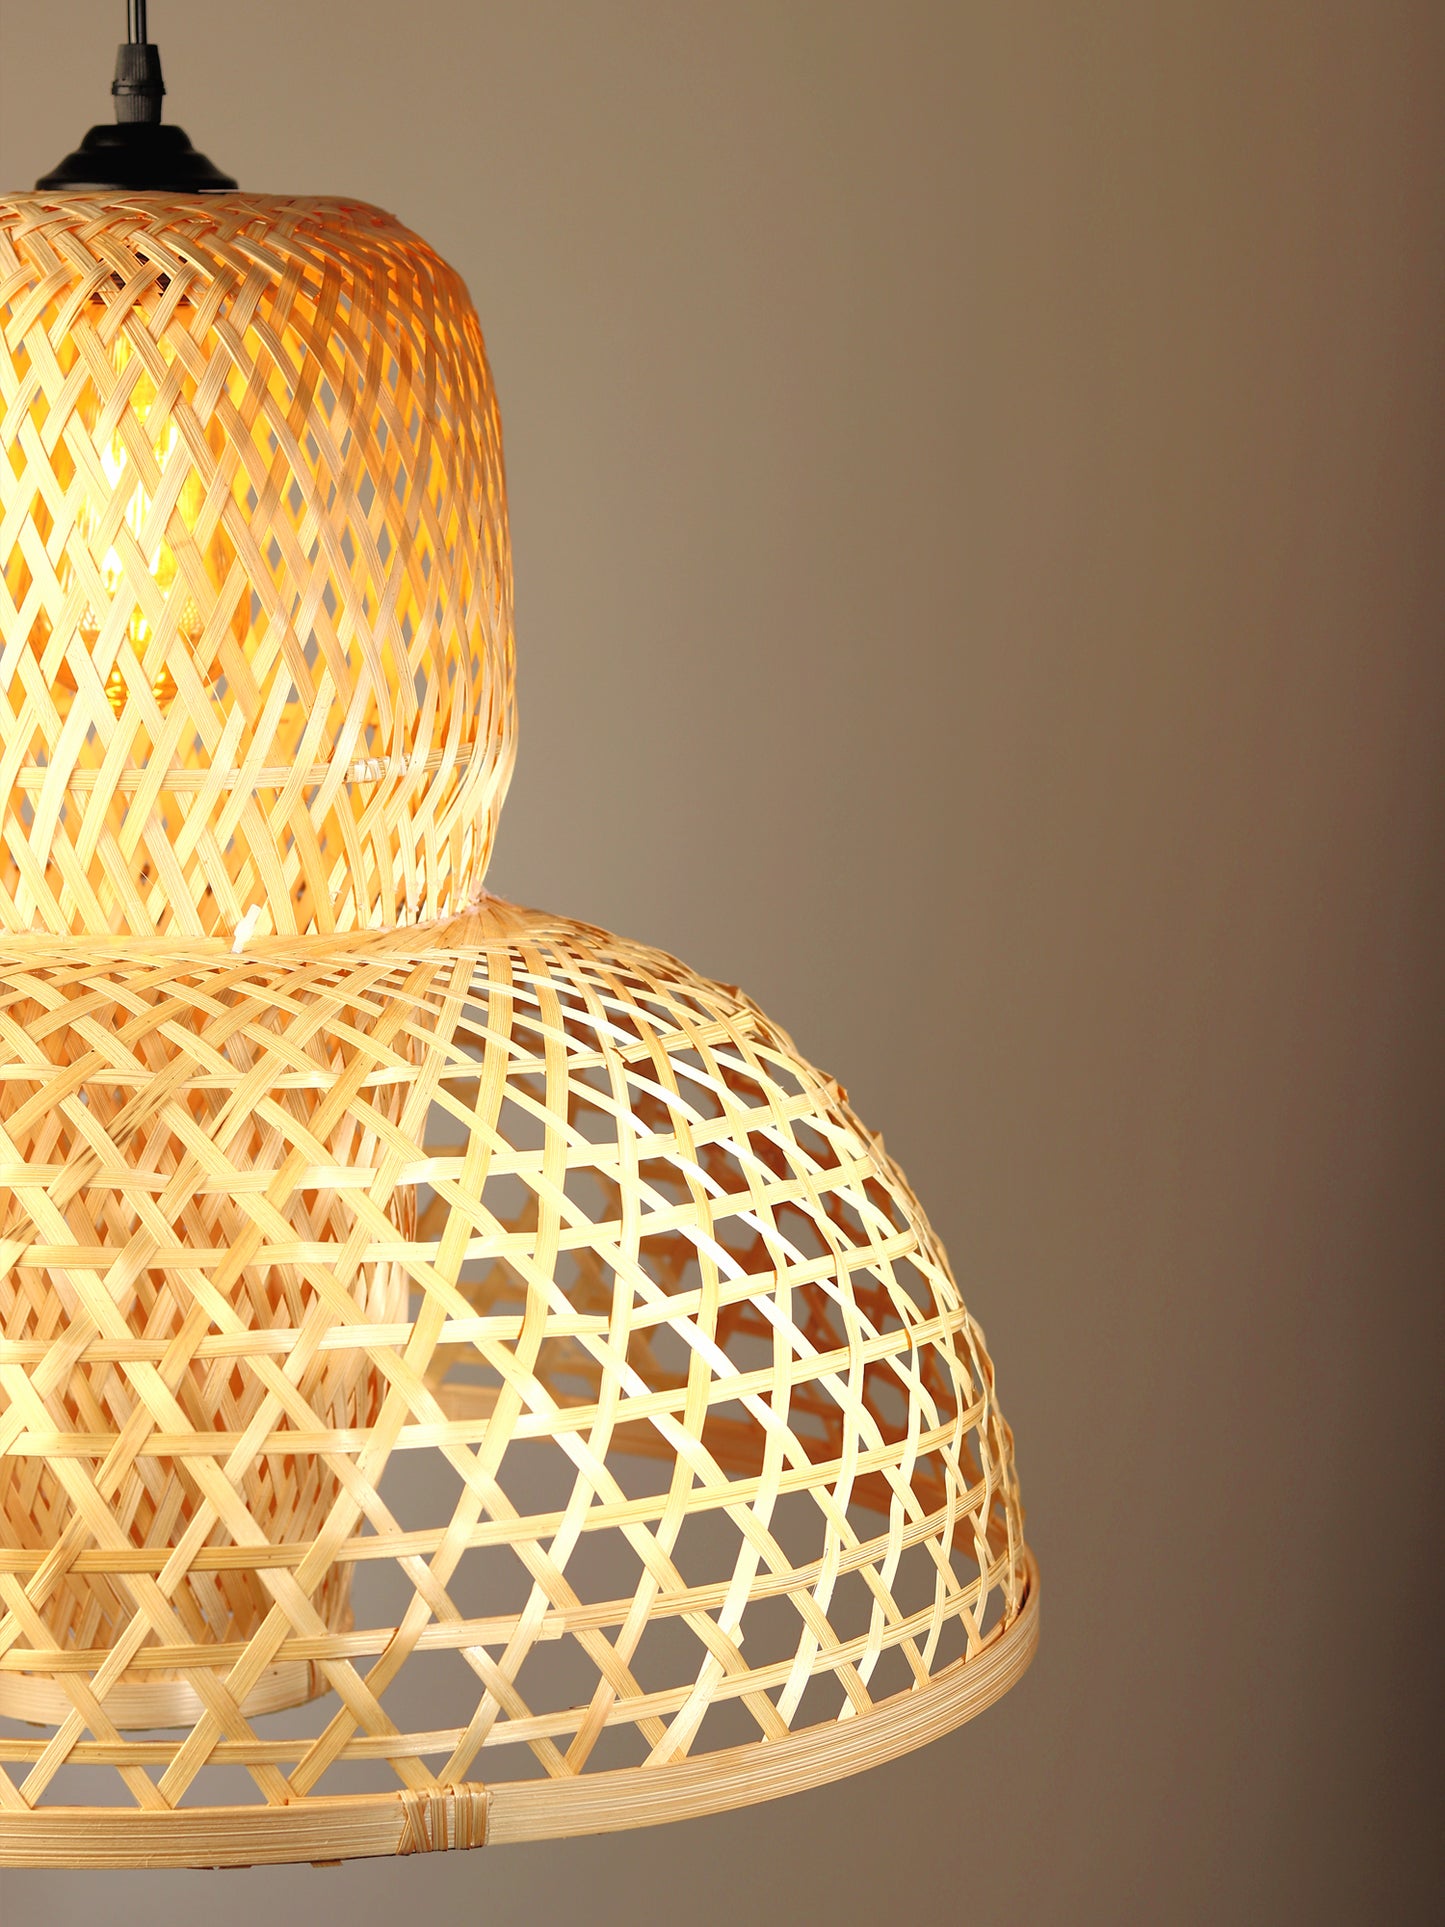 Bamboo Lamp | Hanging Pendant Light